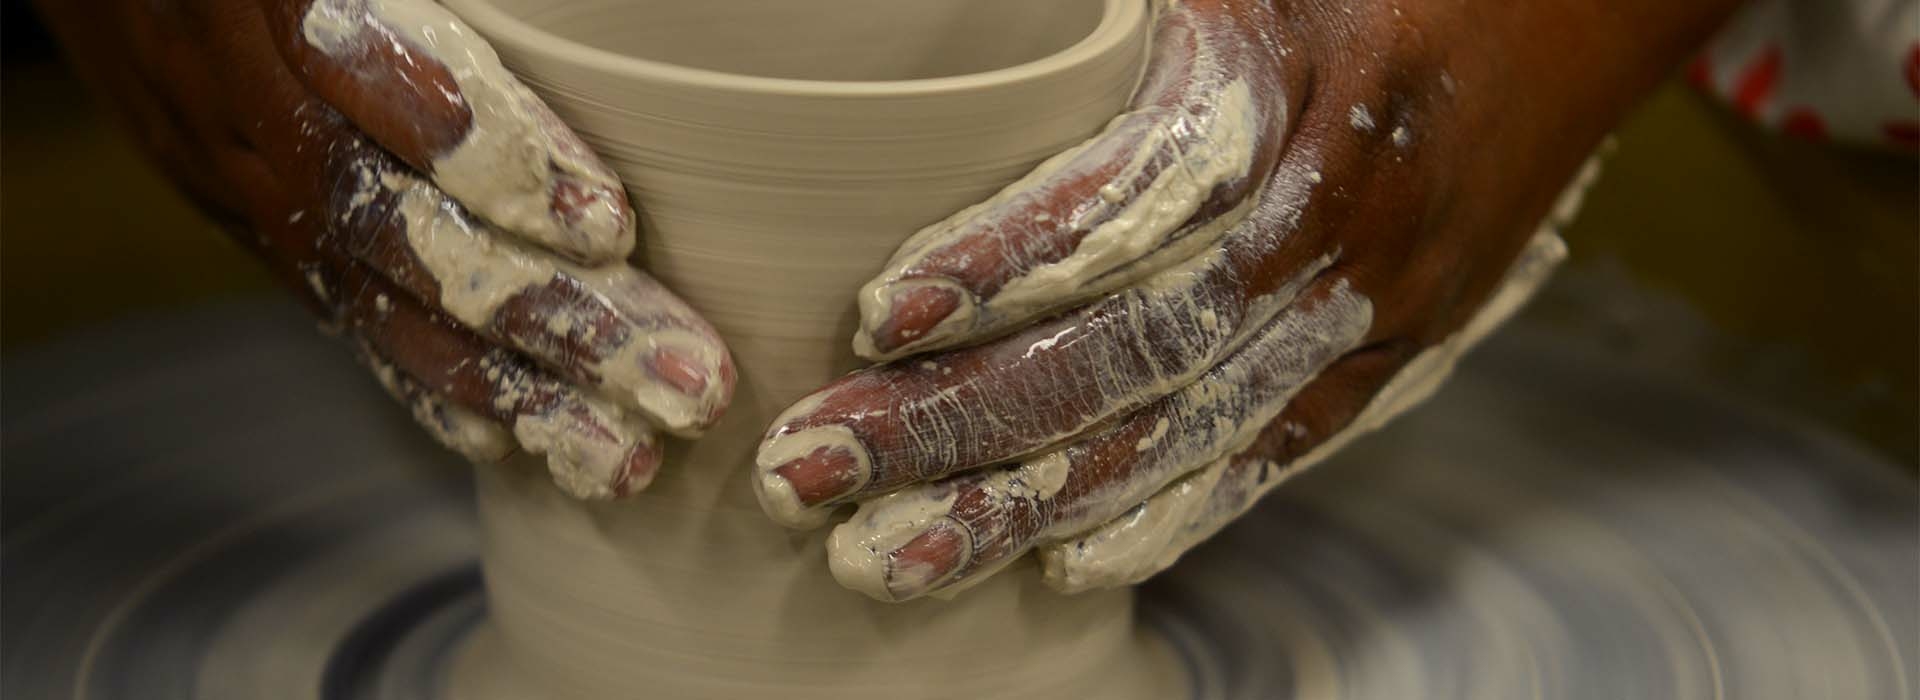 Hands throwing a pot on a ceramics wheel.